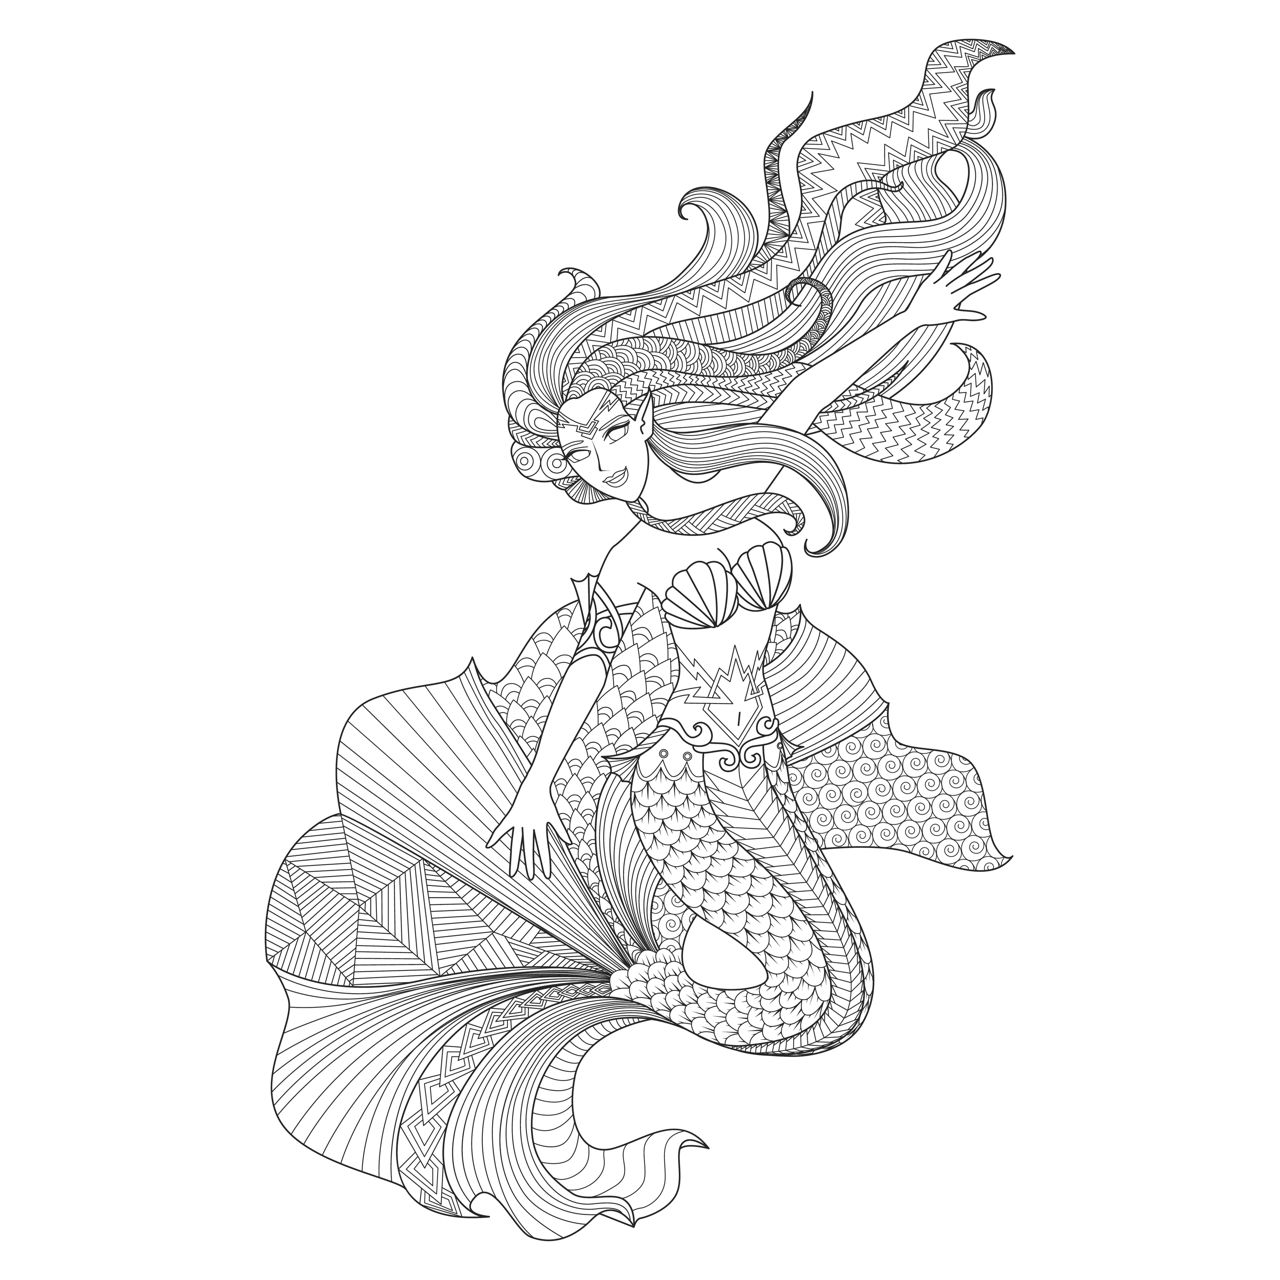 Mermaid Drawing Ideas ➤ How to draw a Mermaid